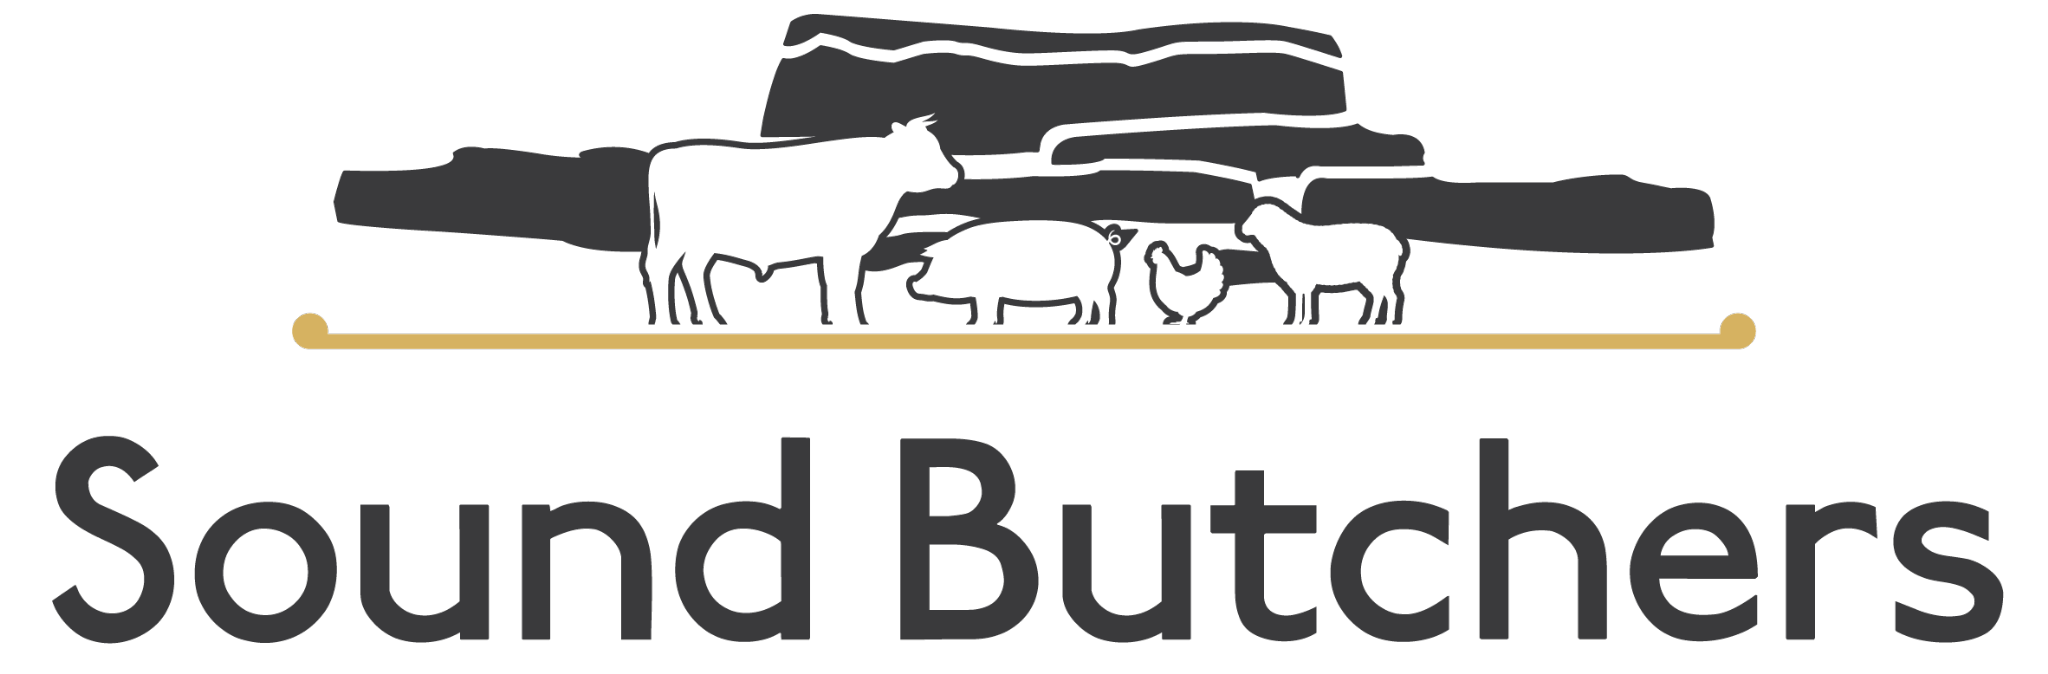 Sound Butchers Logo